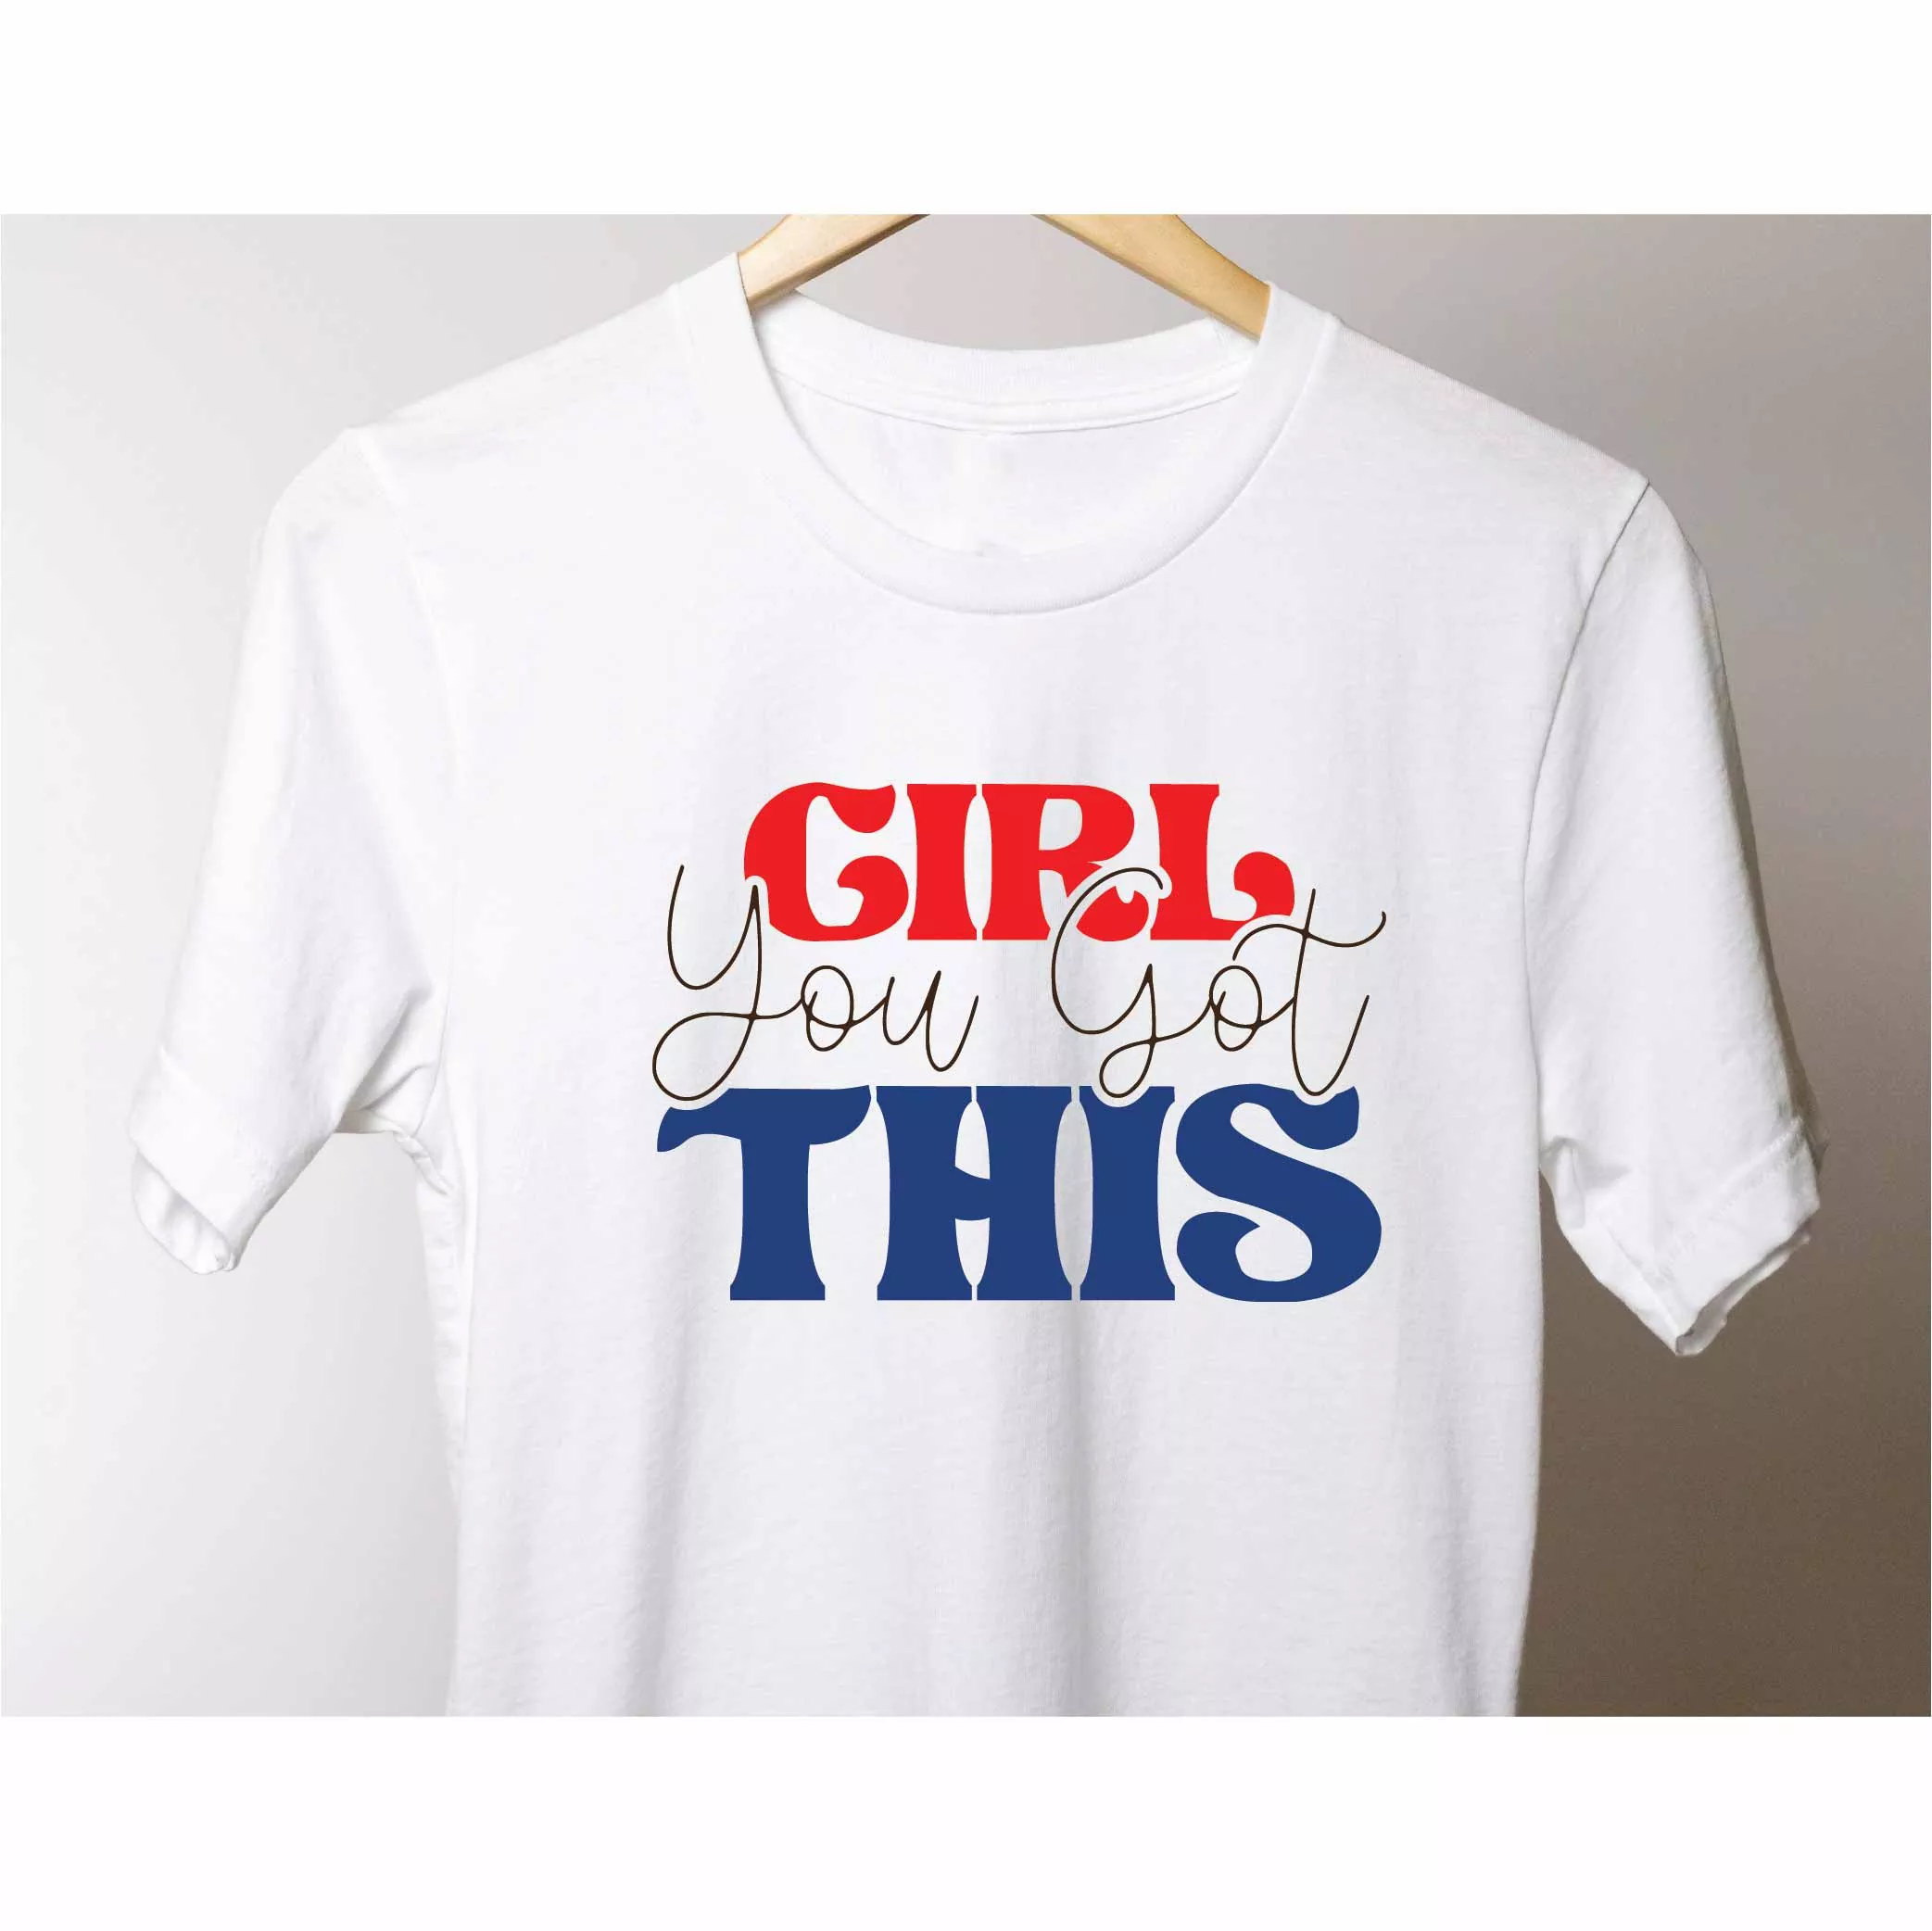 Girl You Got This Printed T-Shirt